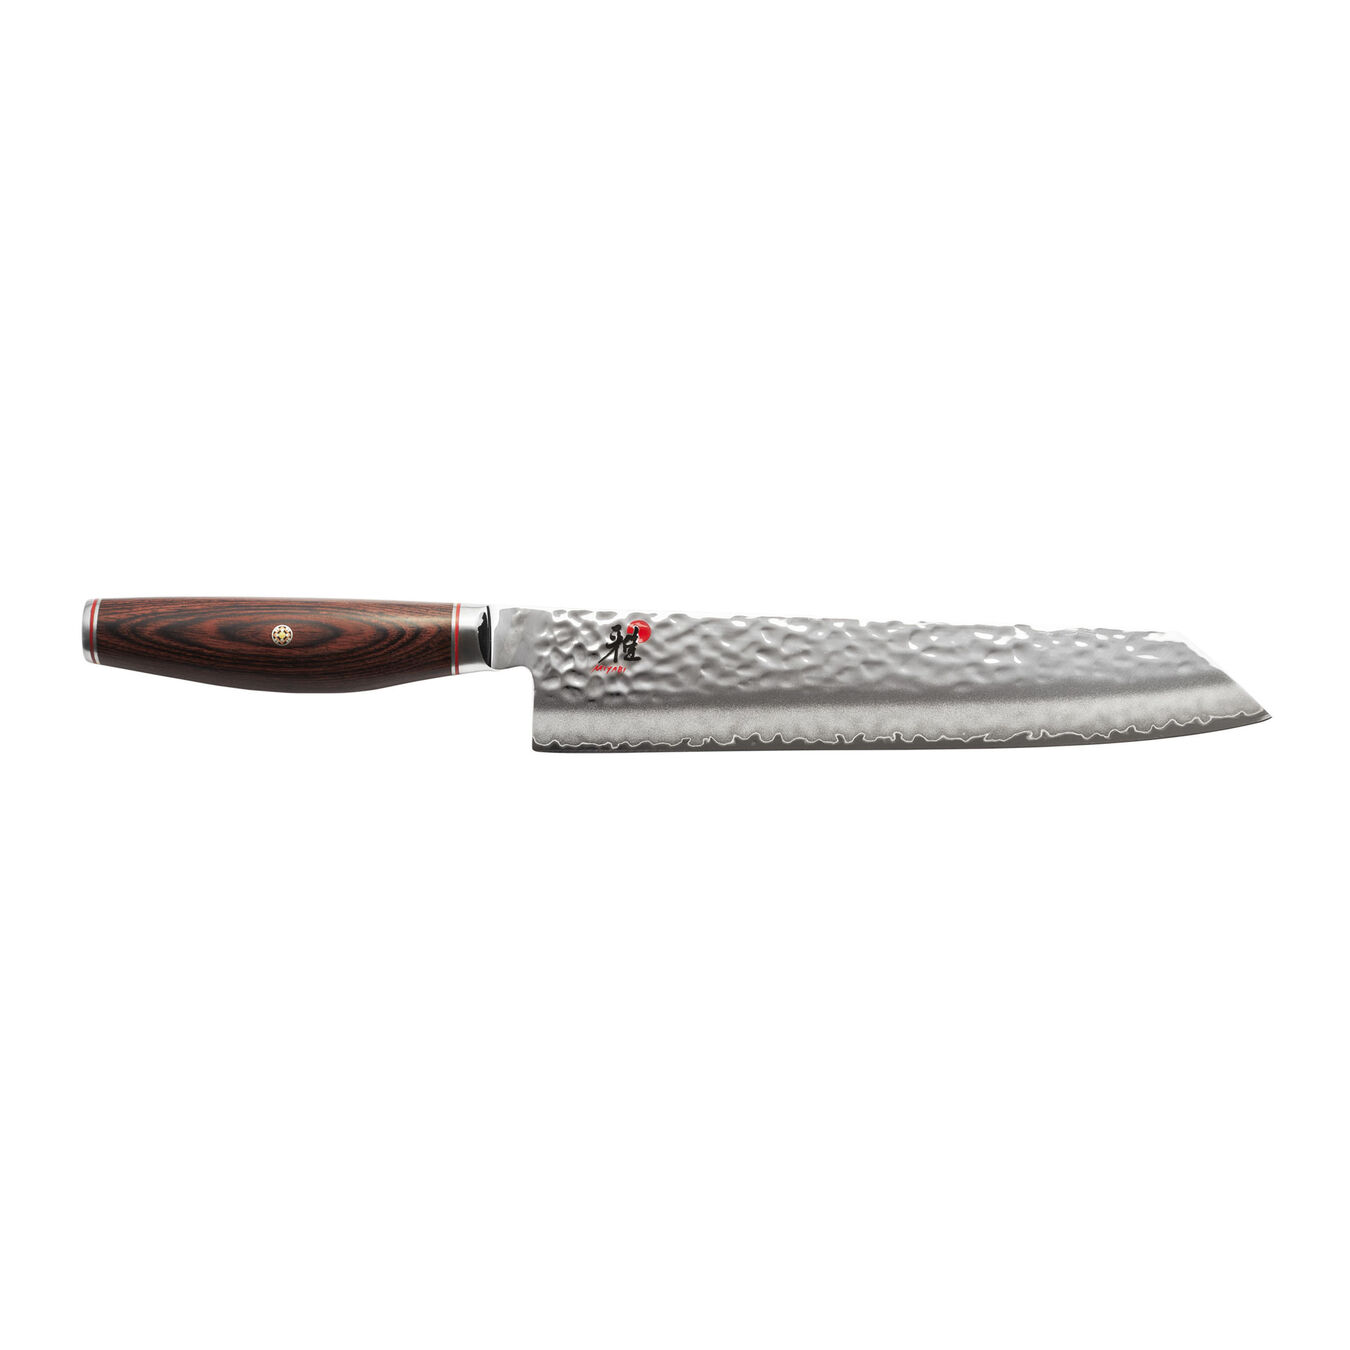 9.5-inch, Kiritsuke Knife,,large 1